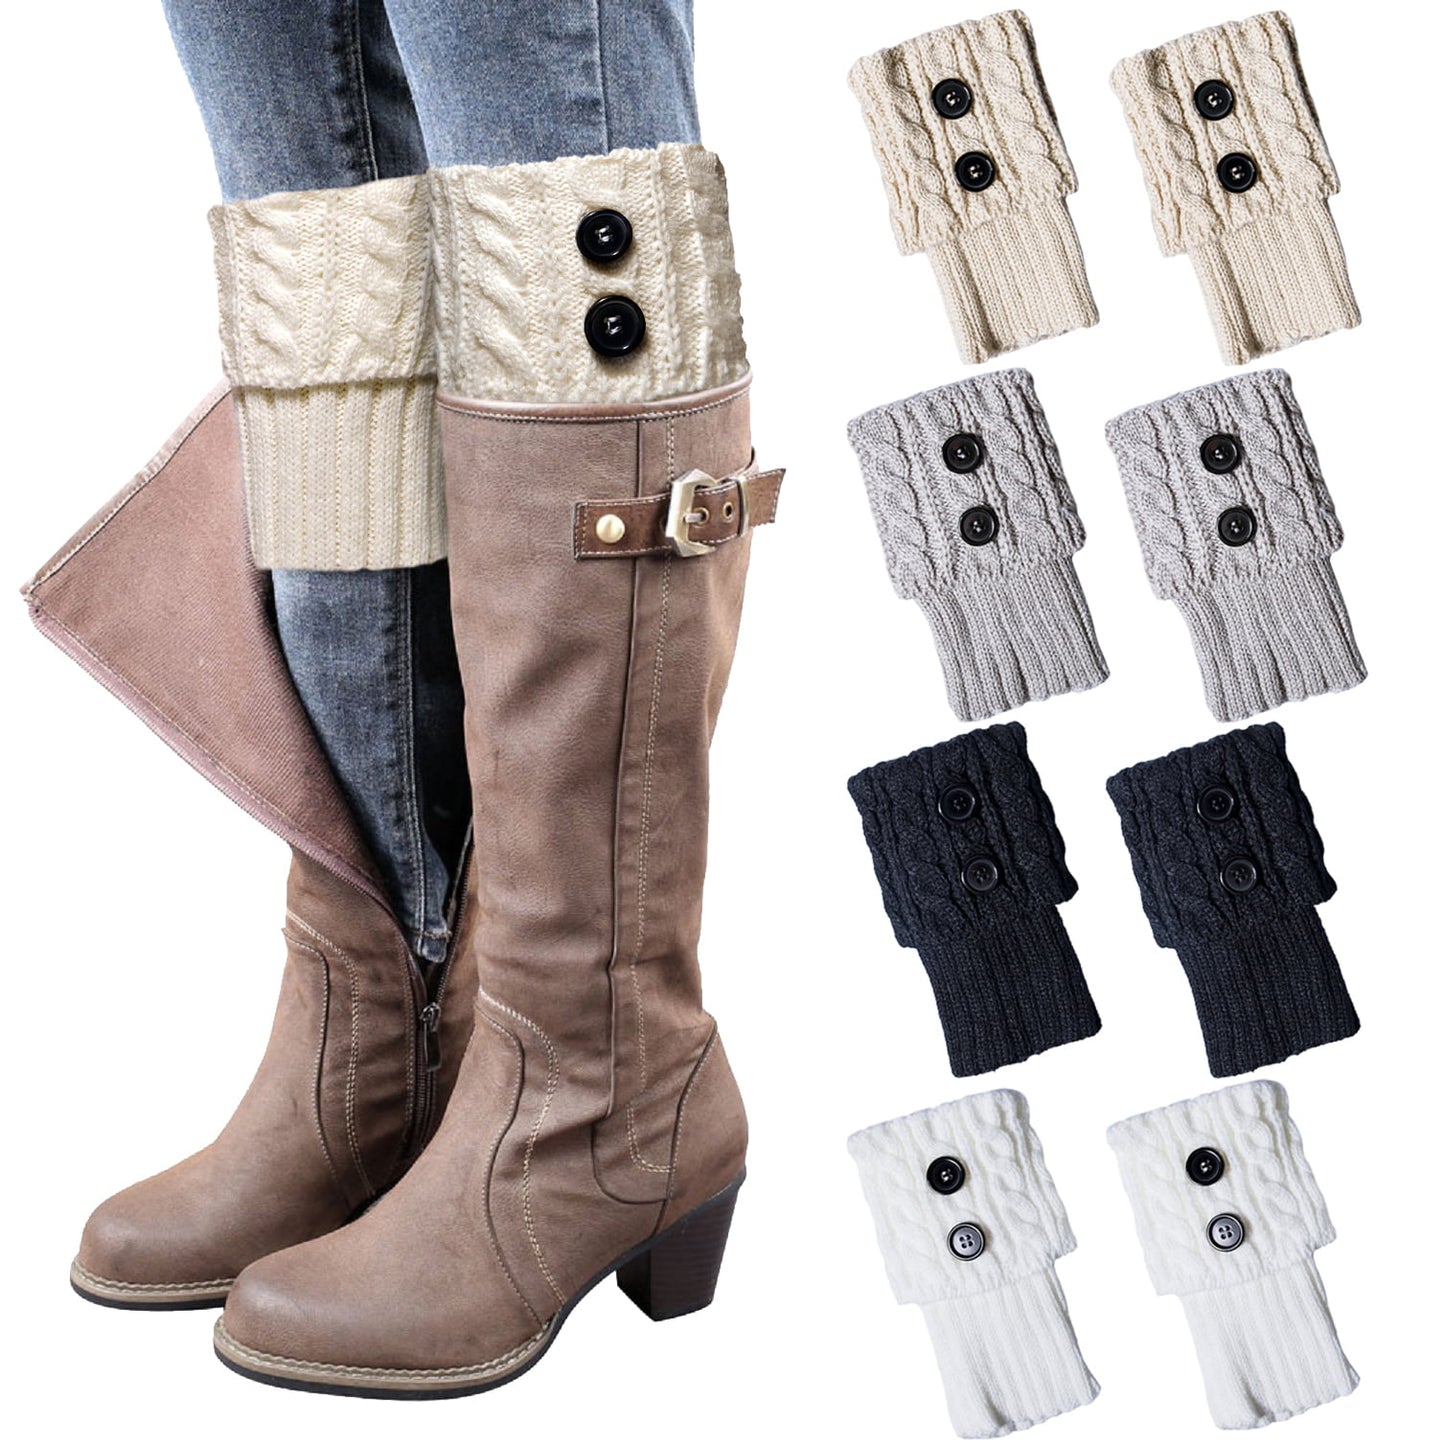 Loritta 4 Pairs Women Boot Cuffs Short Socks Knit Toppers Leg Warmers Gifts